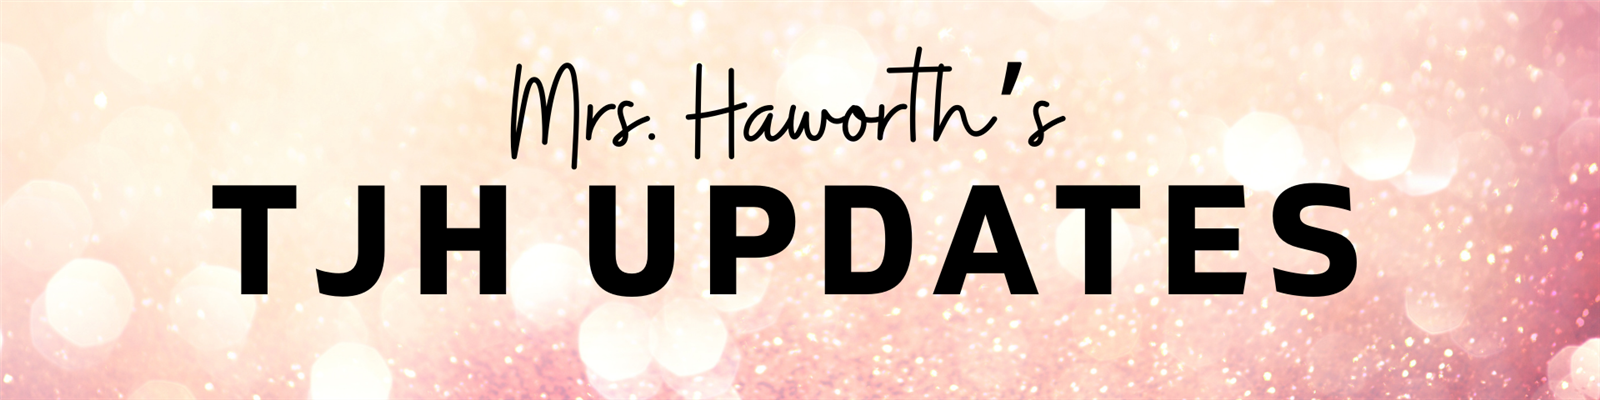 Mrs. Haworth's TJH Updates